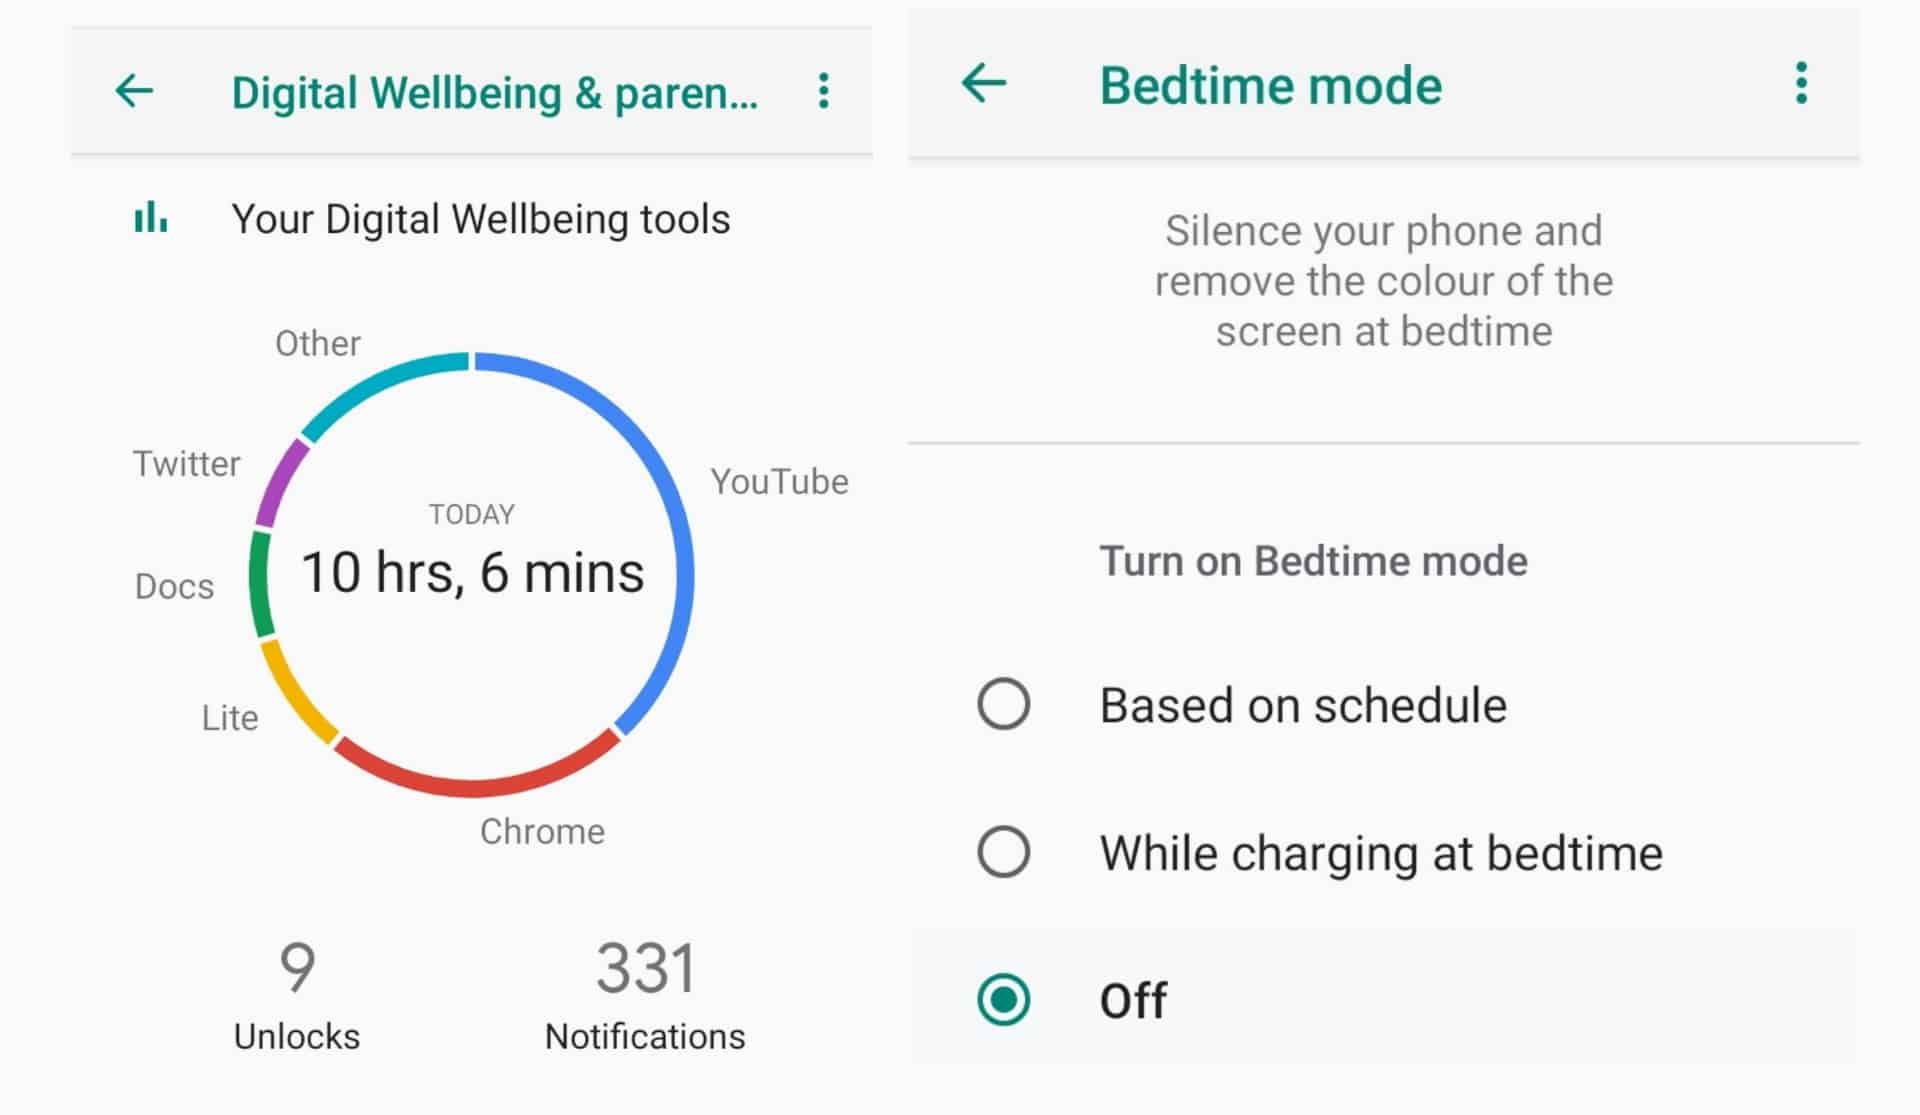 Digital Wellbeing, Sleep Better